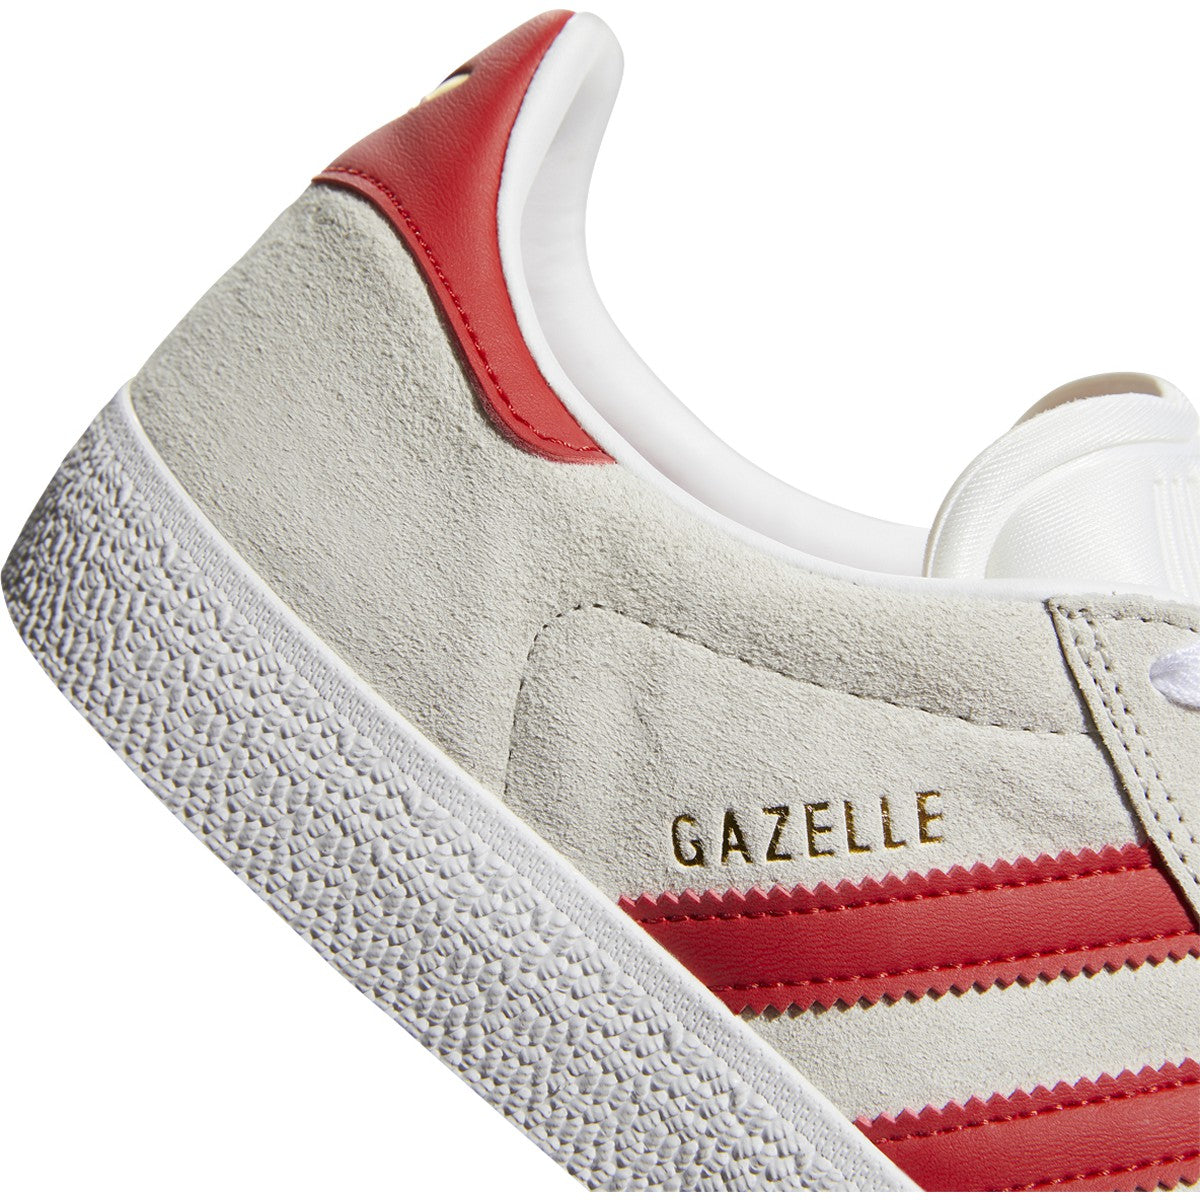 White/Scarlet Red Gazelle ADV Adidas Skateboarding Shoe Detail